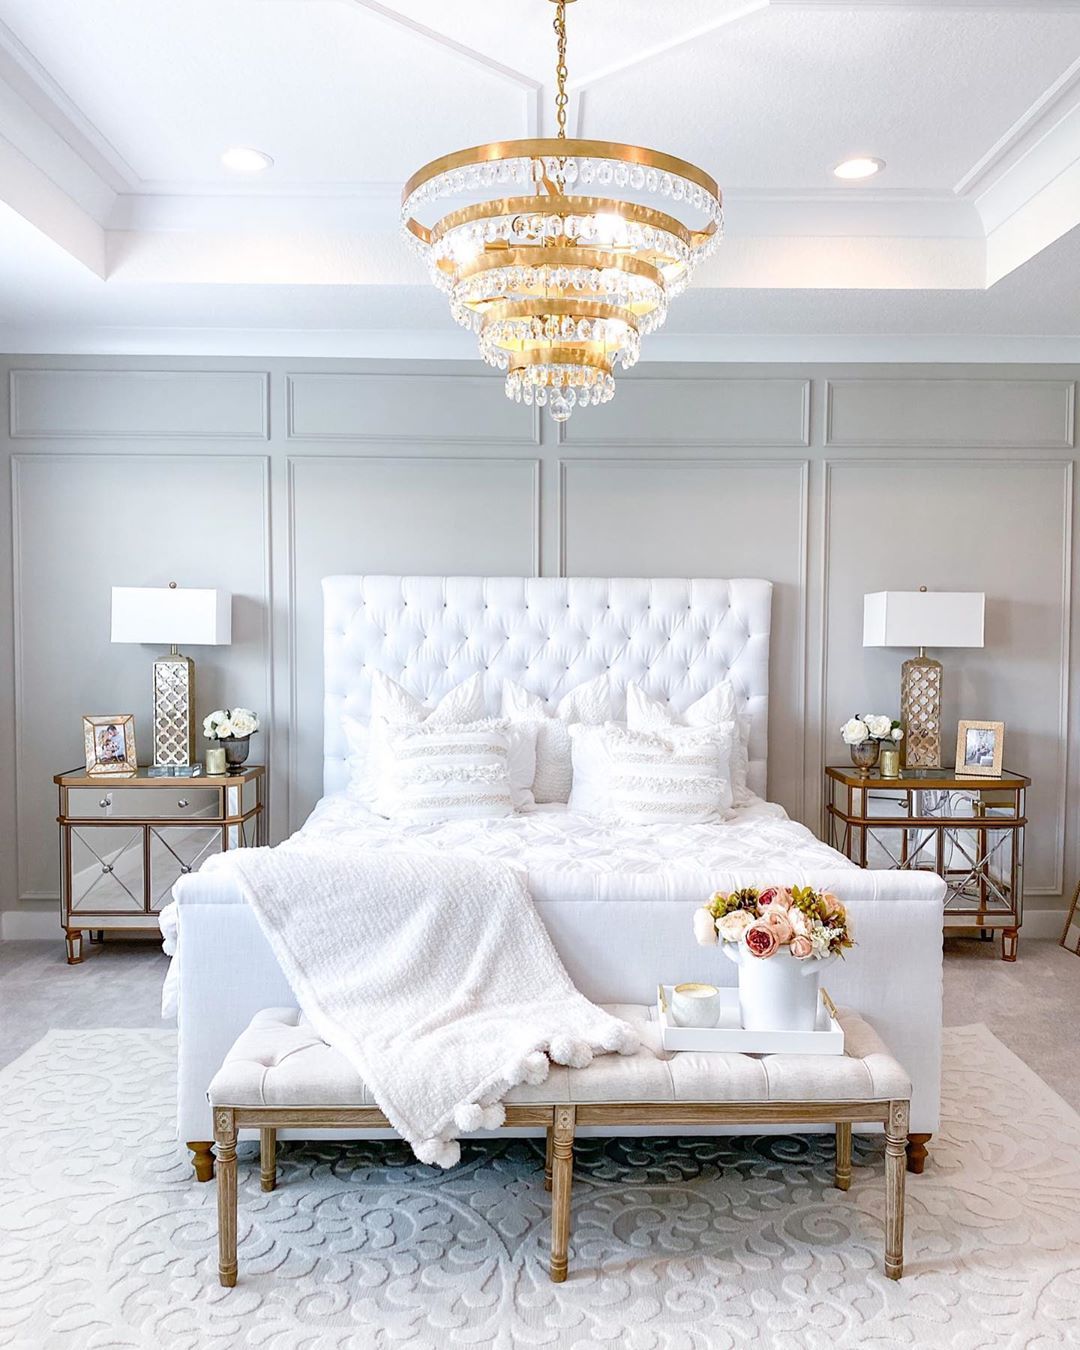 Glam Bedroom with Gold crystal chandelier via @jscott24